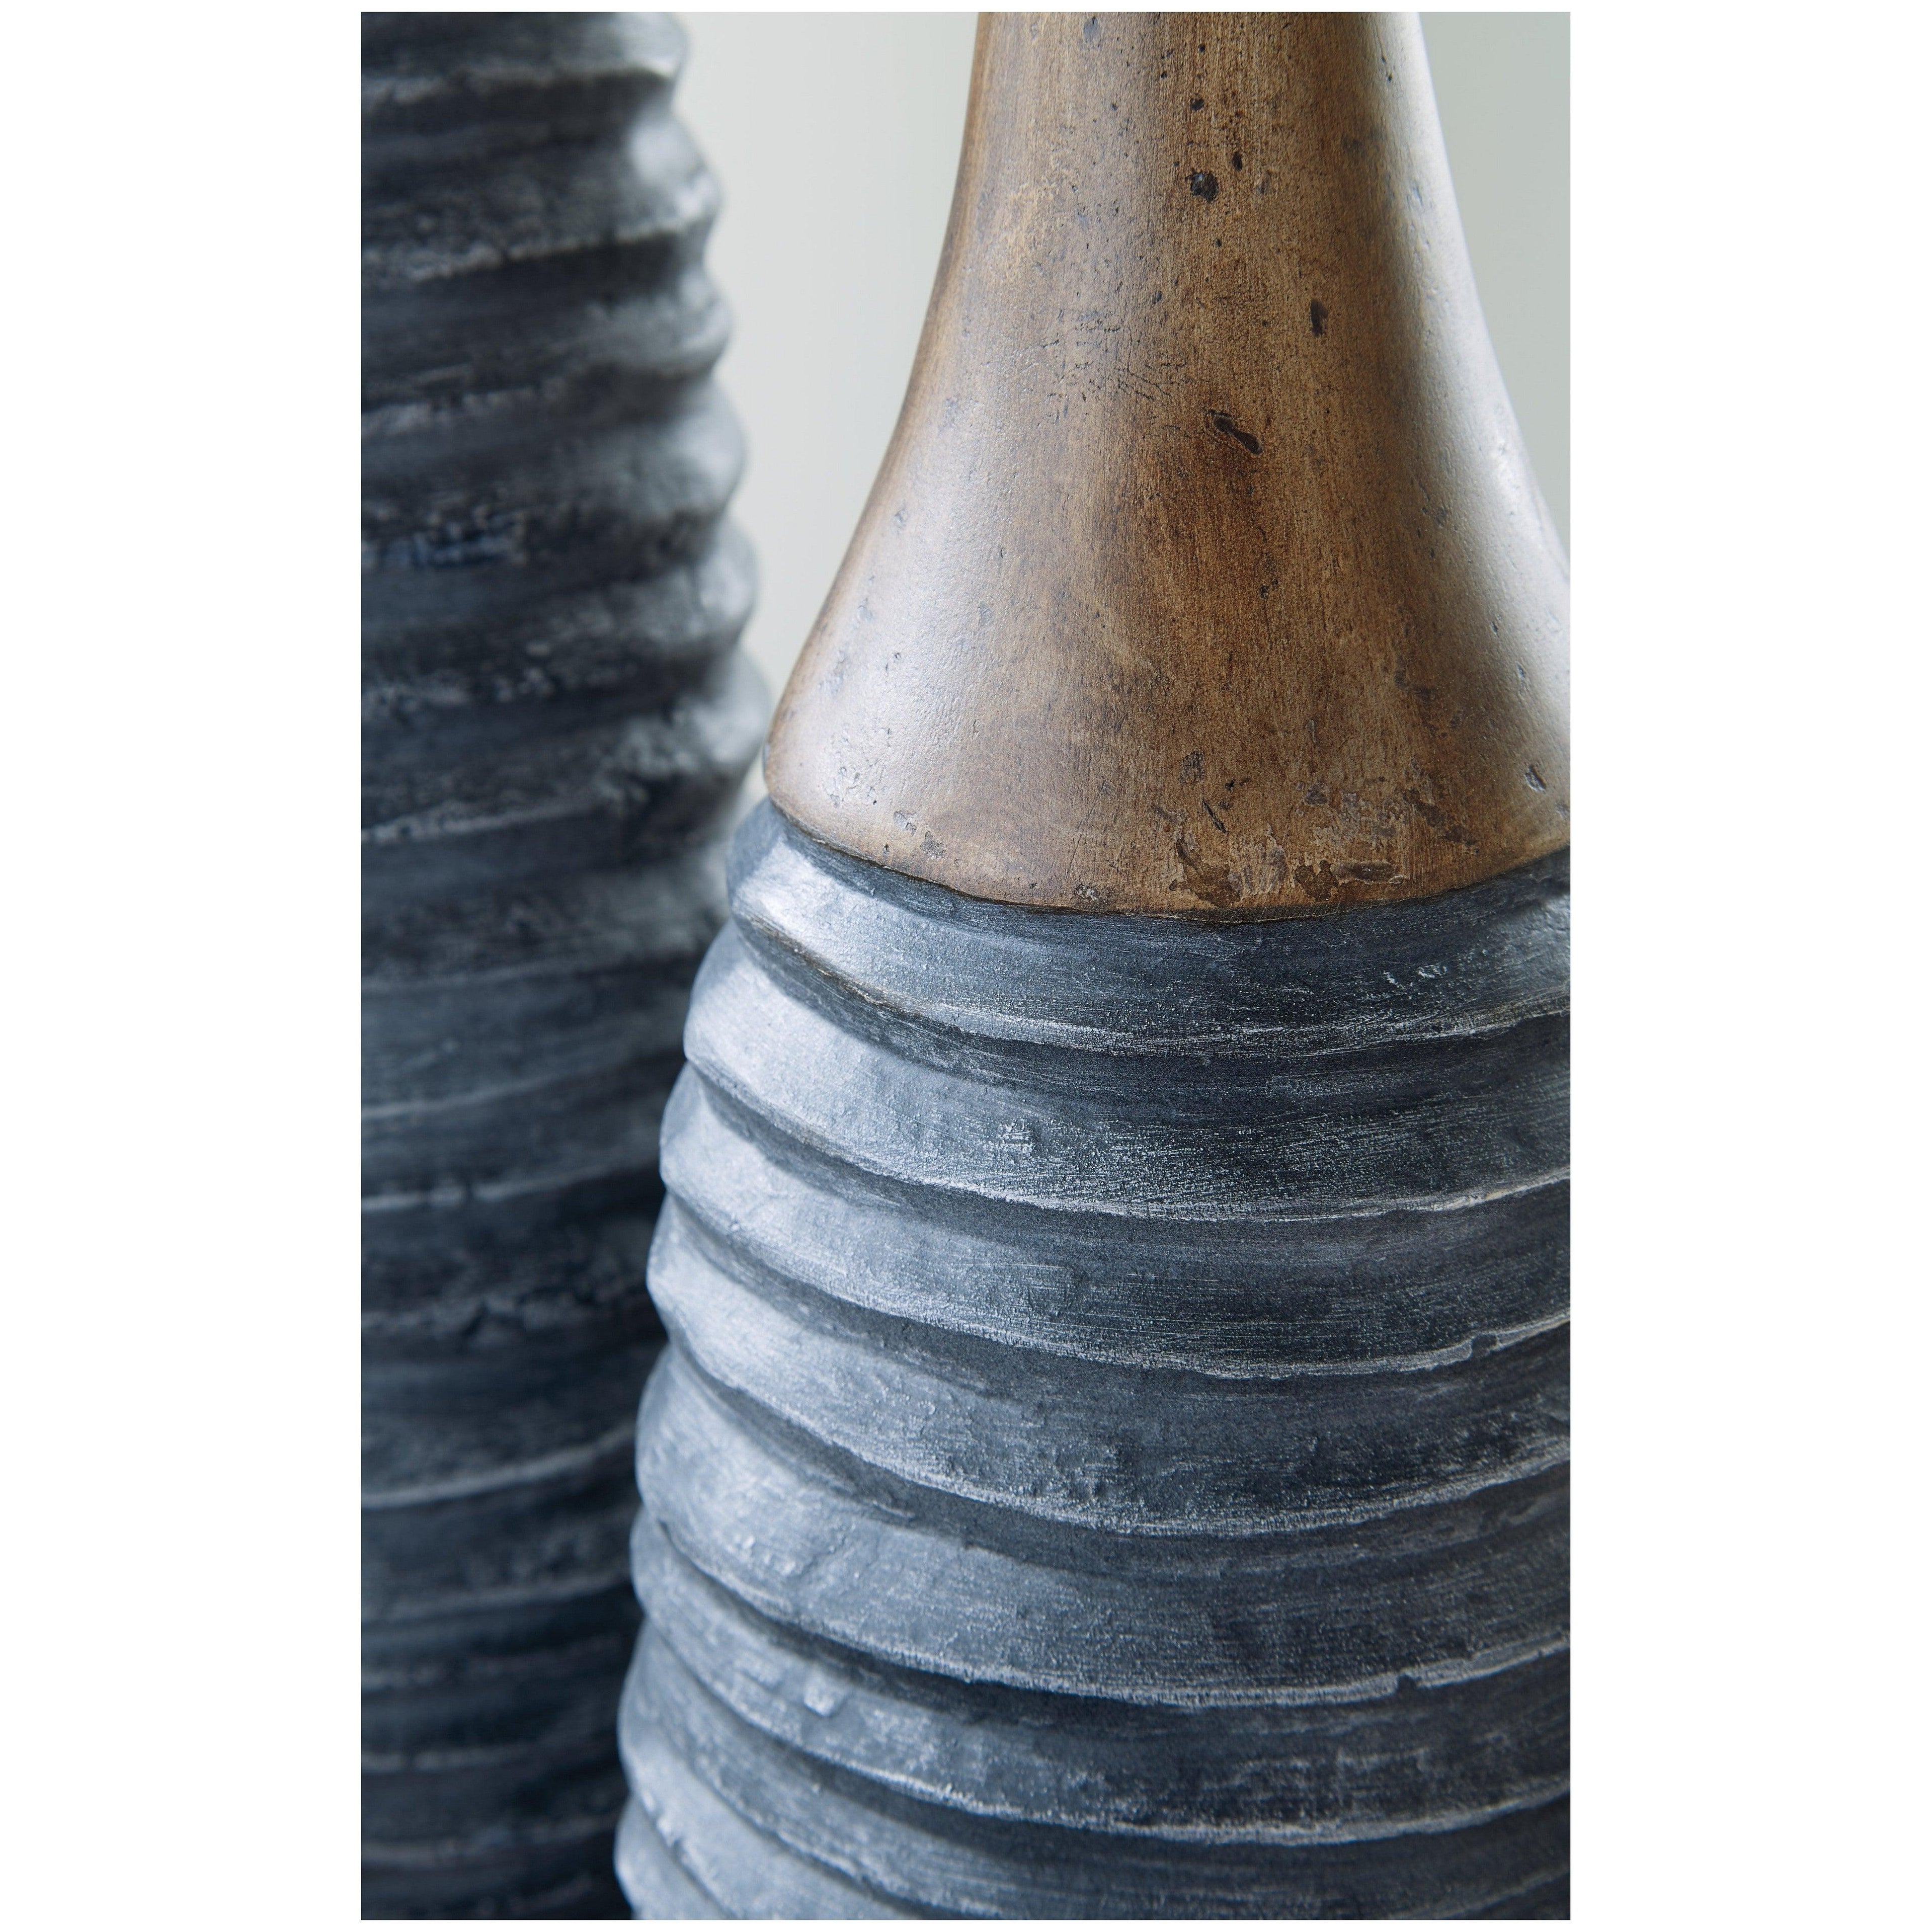 BLAYZE Vase (Set of 2) Ash-A2000388